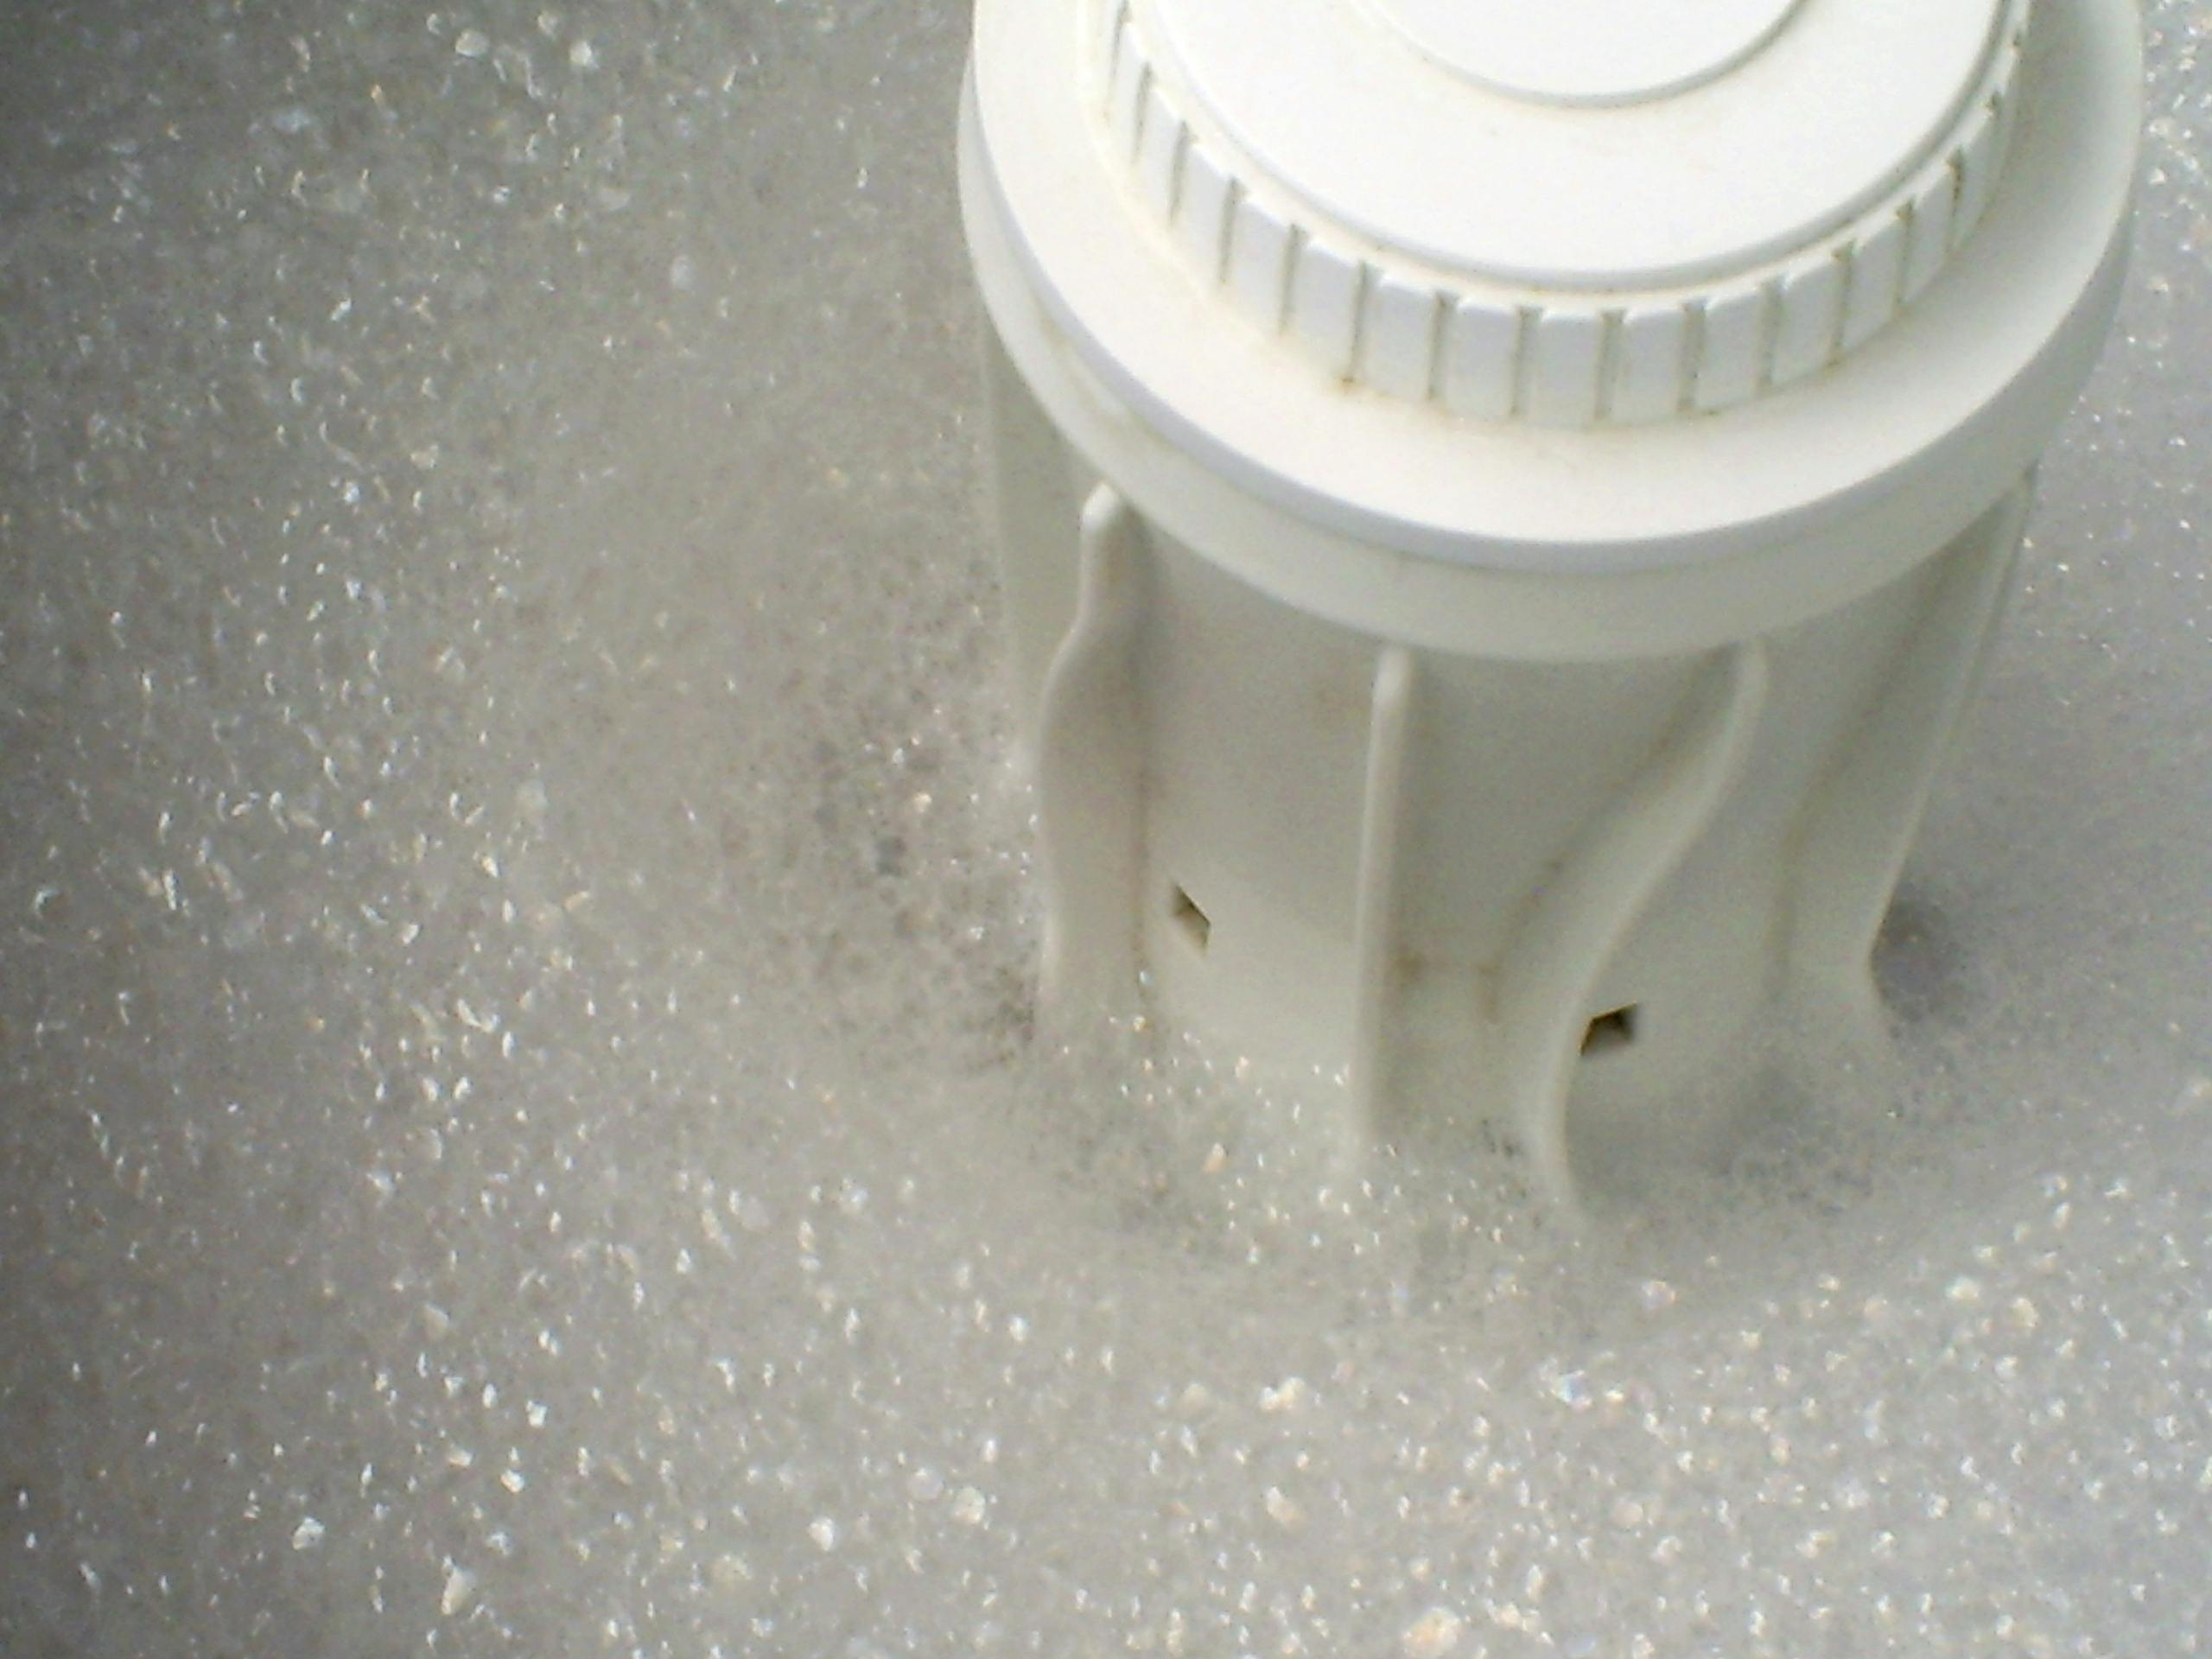 Free stock photo of washing machine bubbles white